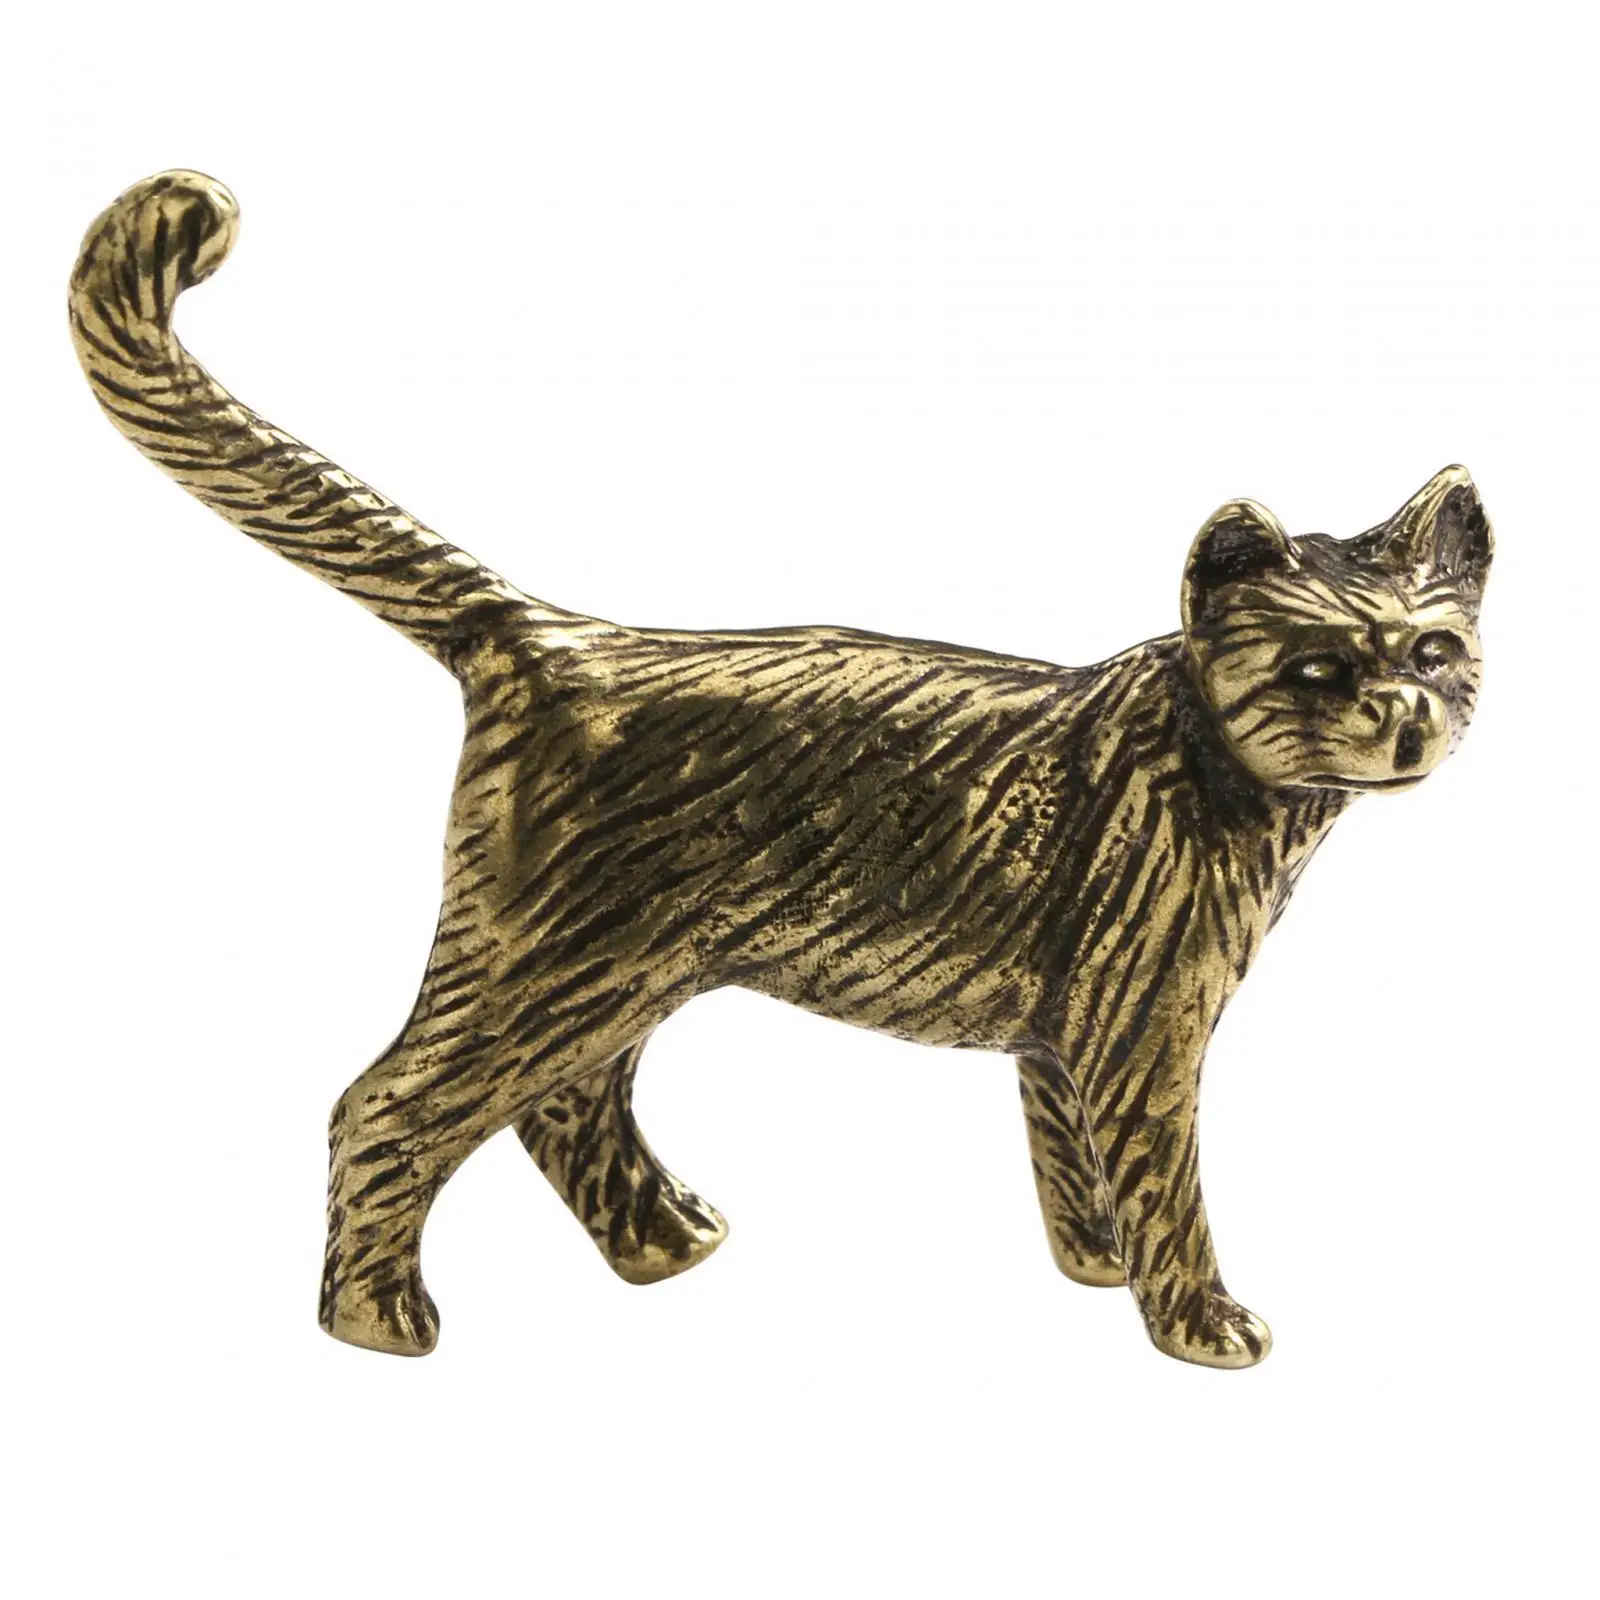 Cat Copper Sculpture Excellent Craftsmanship Crafts Collectible Animal Figurine